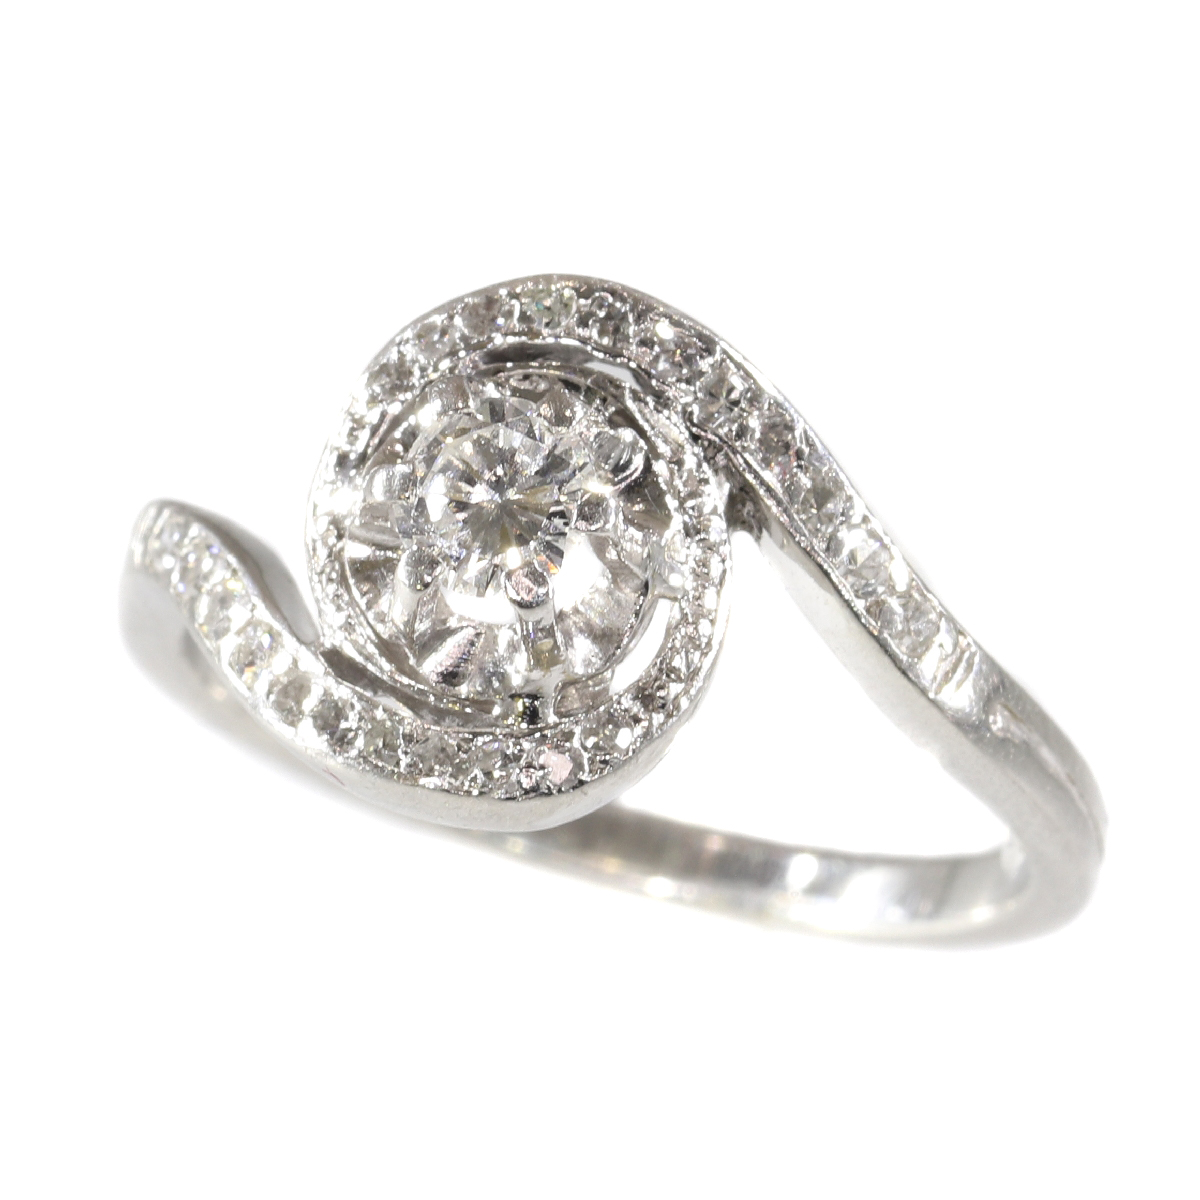 Estate platinum diamond engagement ring a so called tourbillion or twister